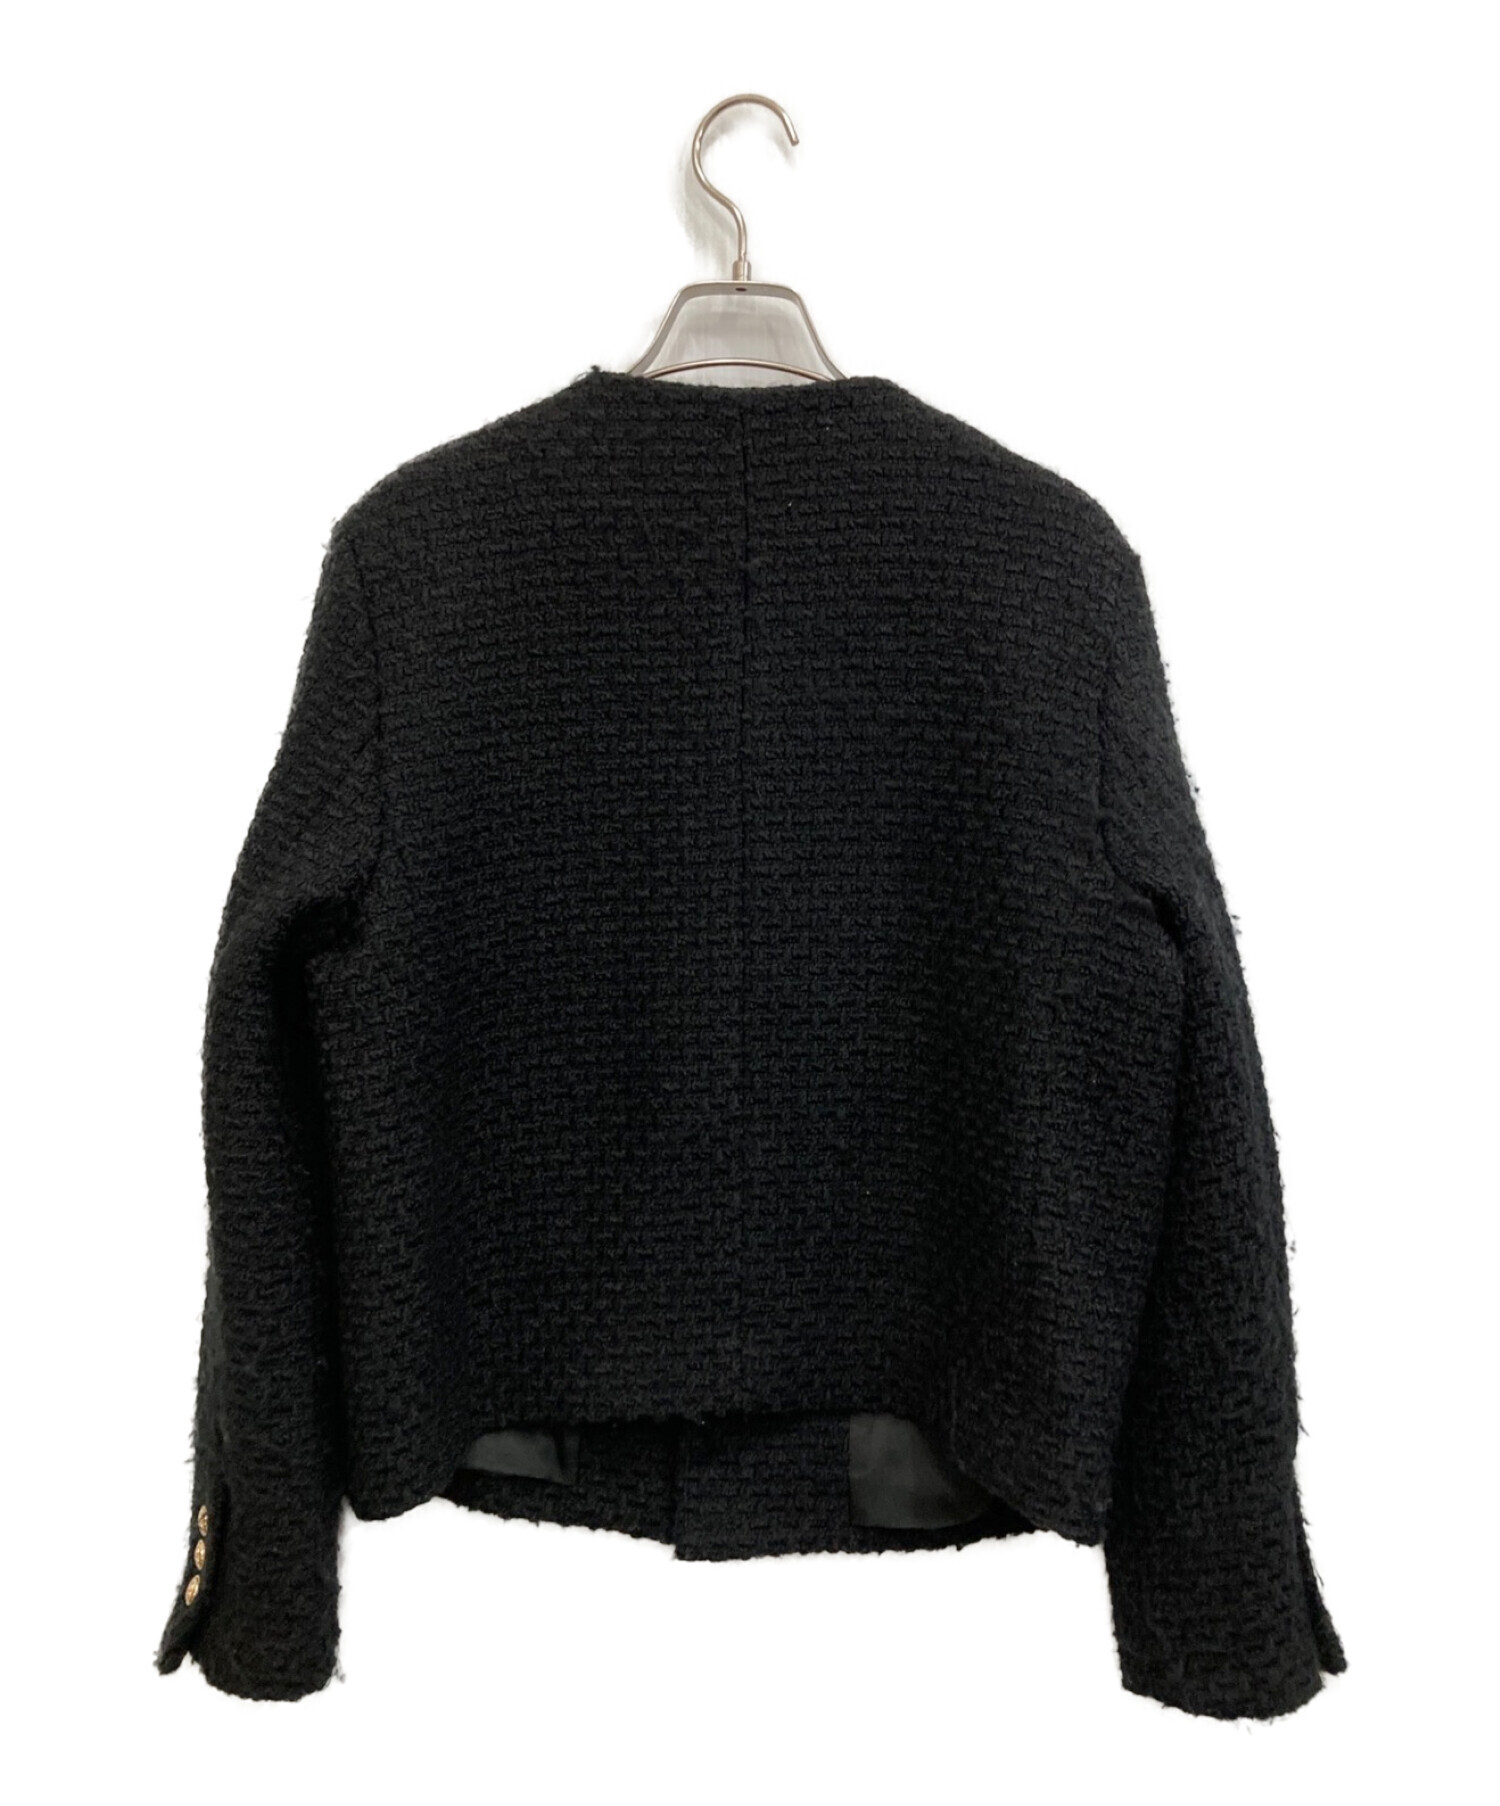 RANDEBOO (ランデブー) Classic tweed jacket ブラック サイズ:F